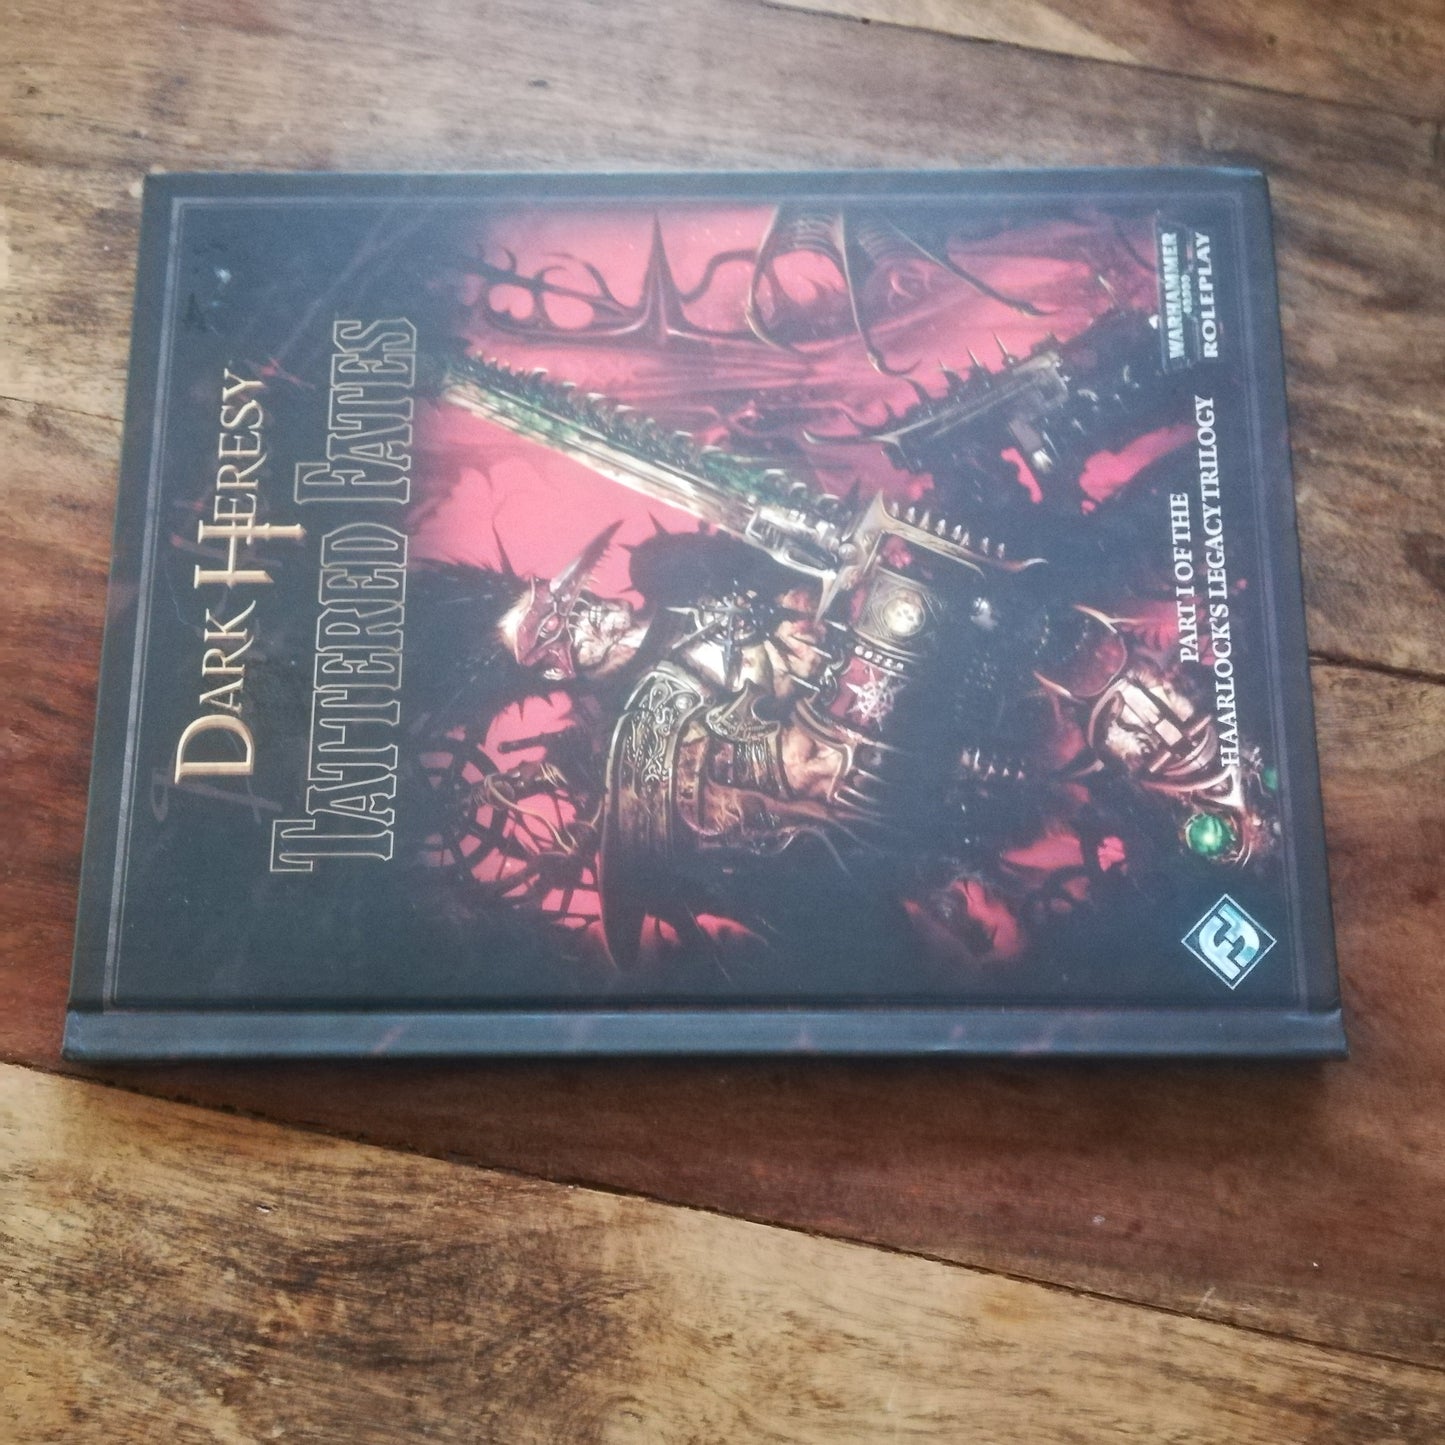 Dark Heresy Tattered Fates Warhammer 40k - Warhammer 40,000 - AllRoleplaying.com